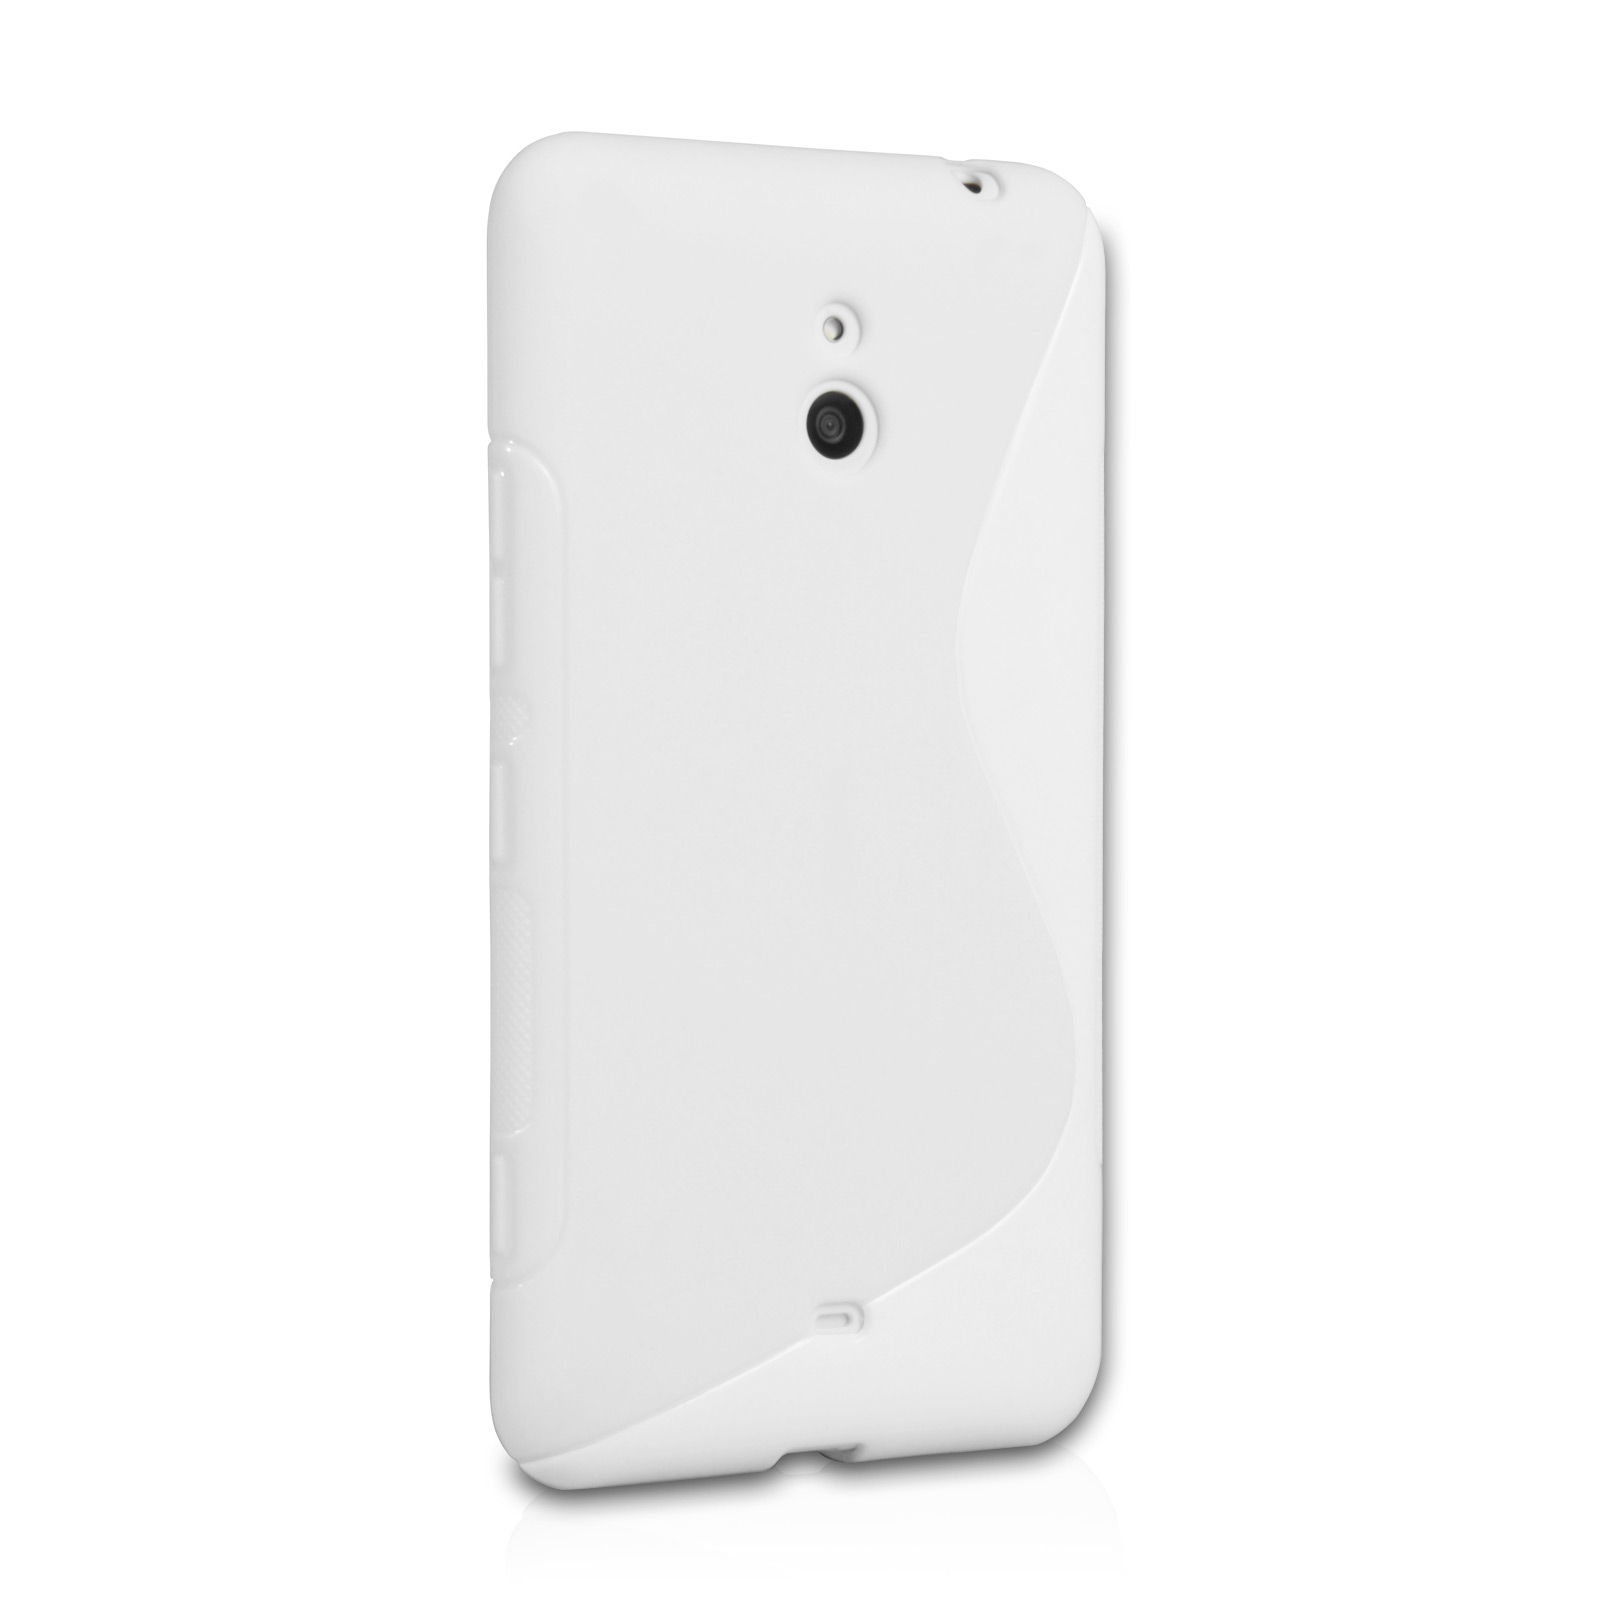 Caseflex Nokia Lumia 1320 Silicone Gel S-Line Case - White